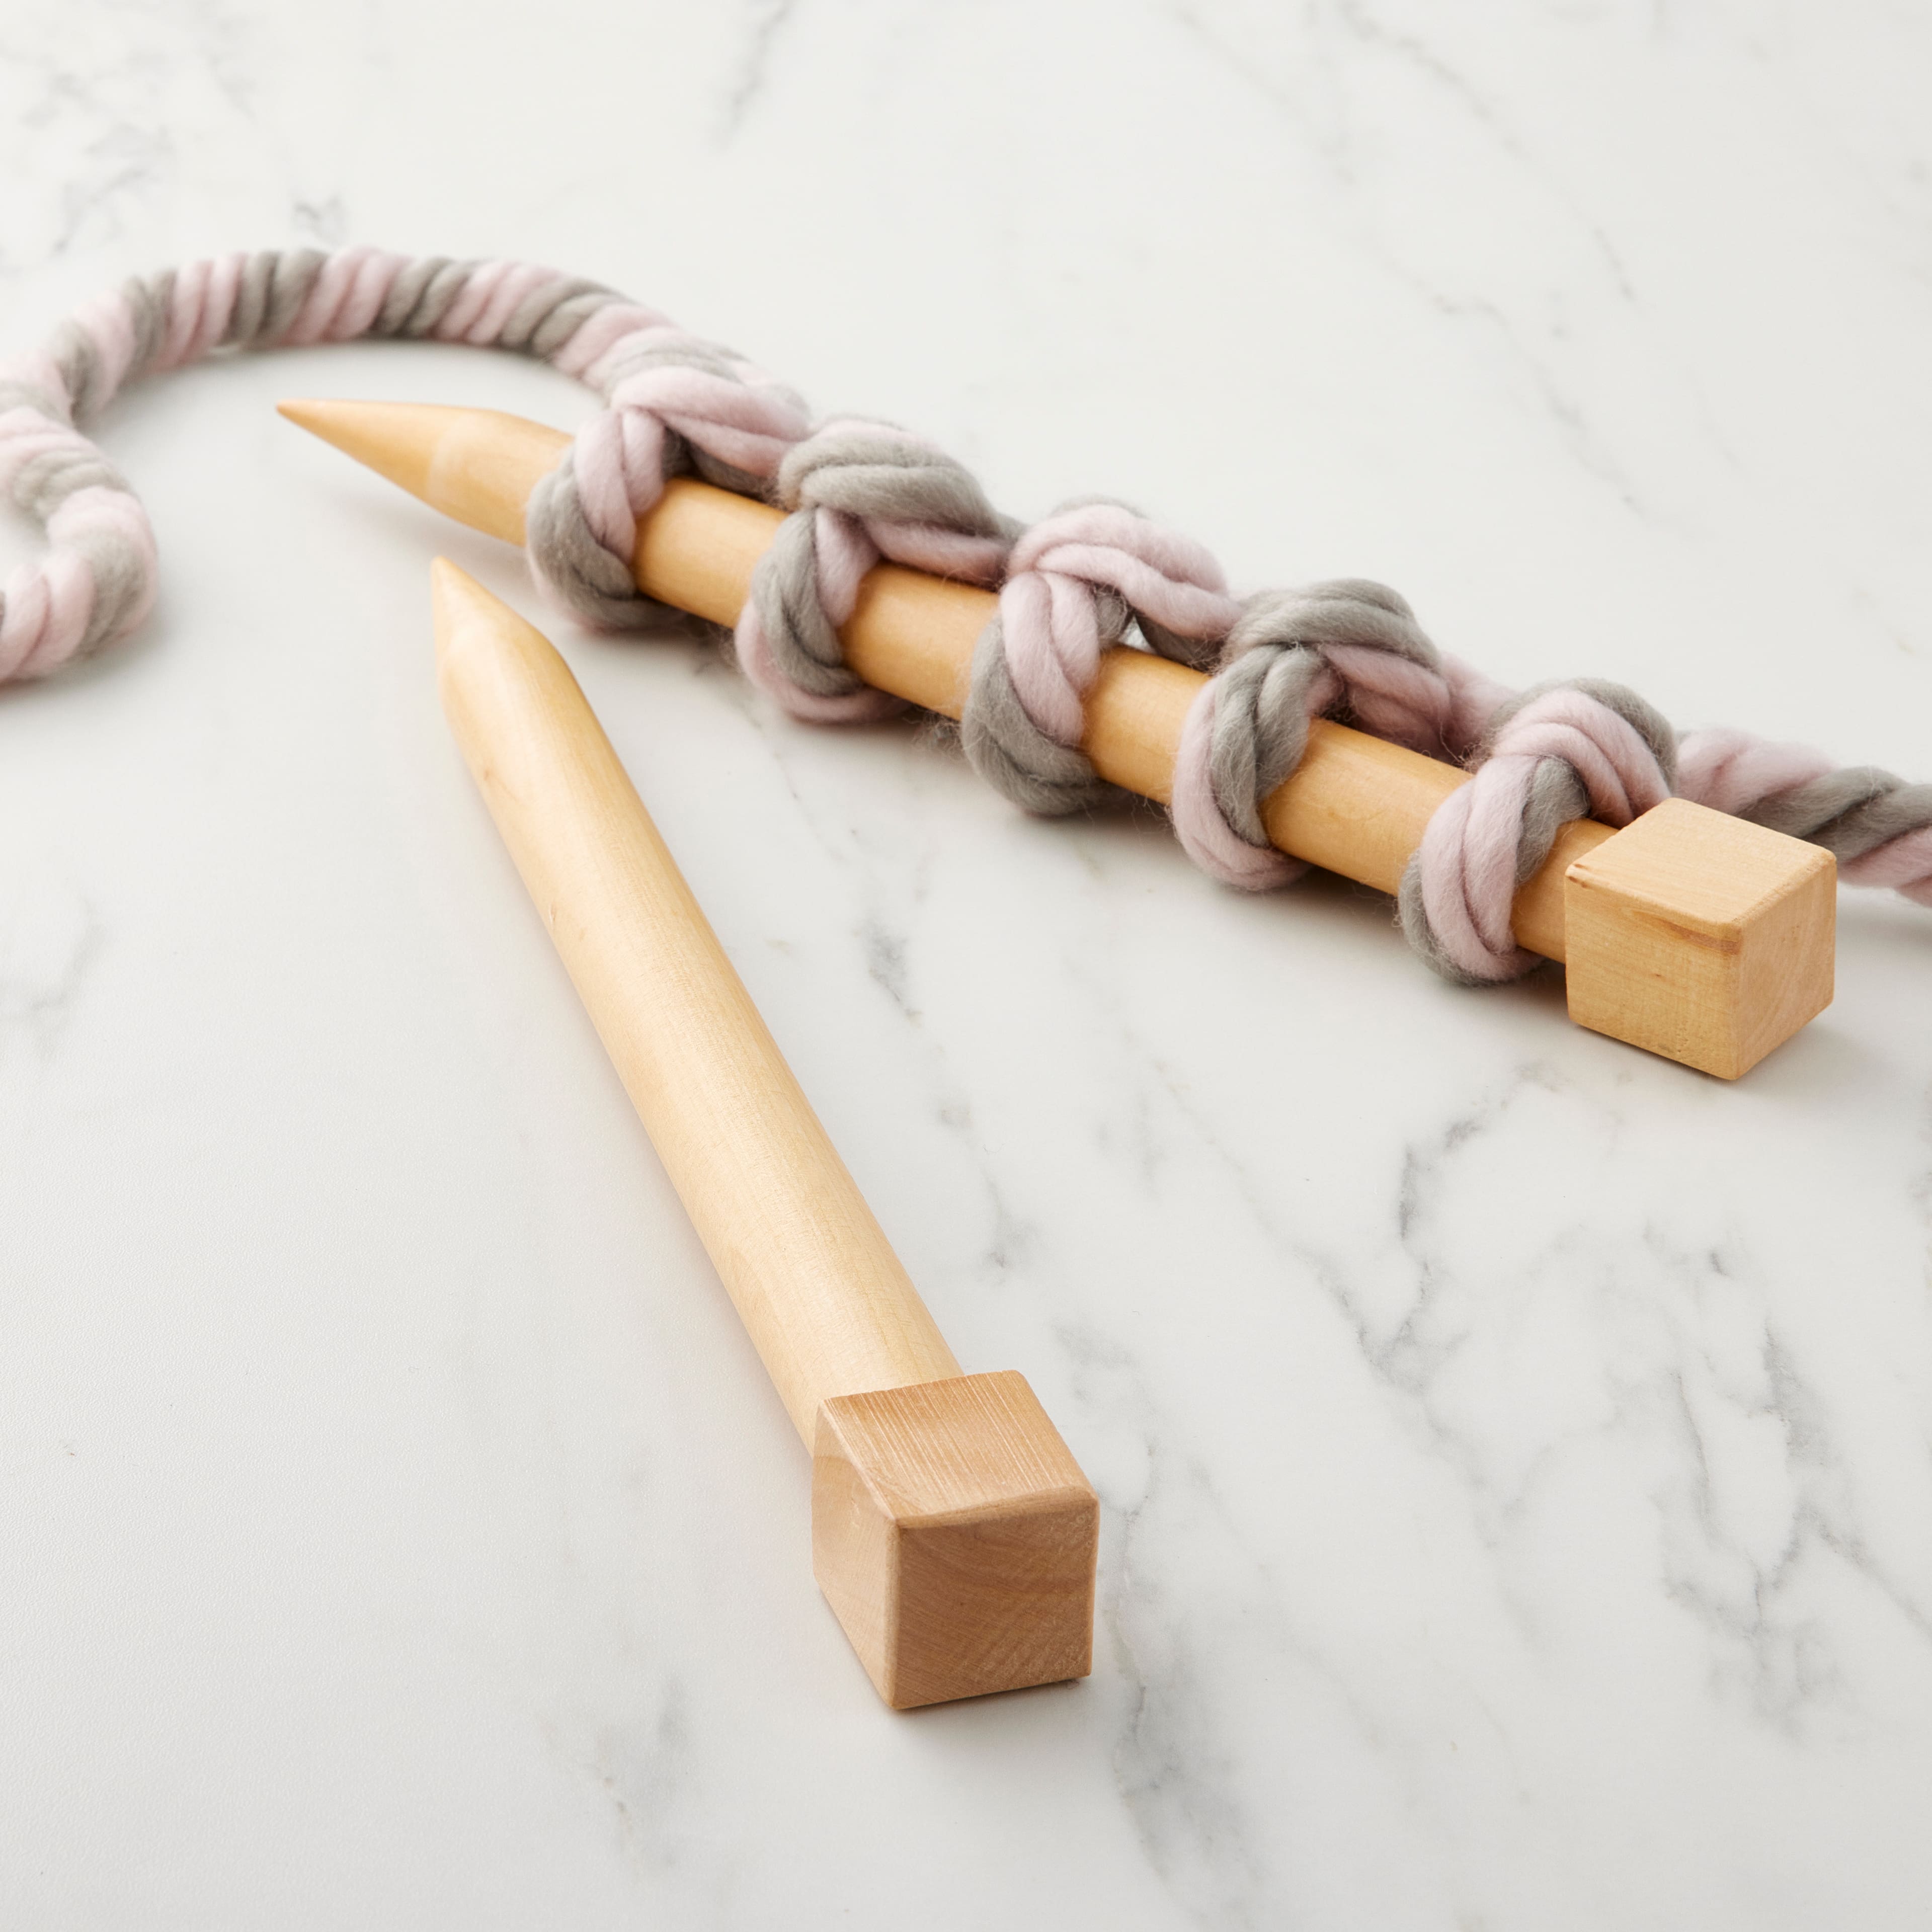 Jumbo Wood Knitting Needles by Loops & Threads